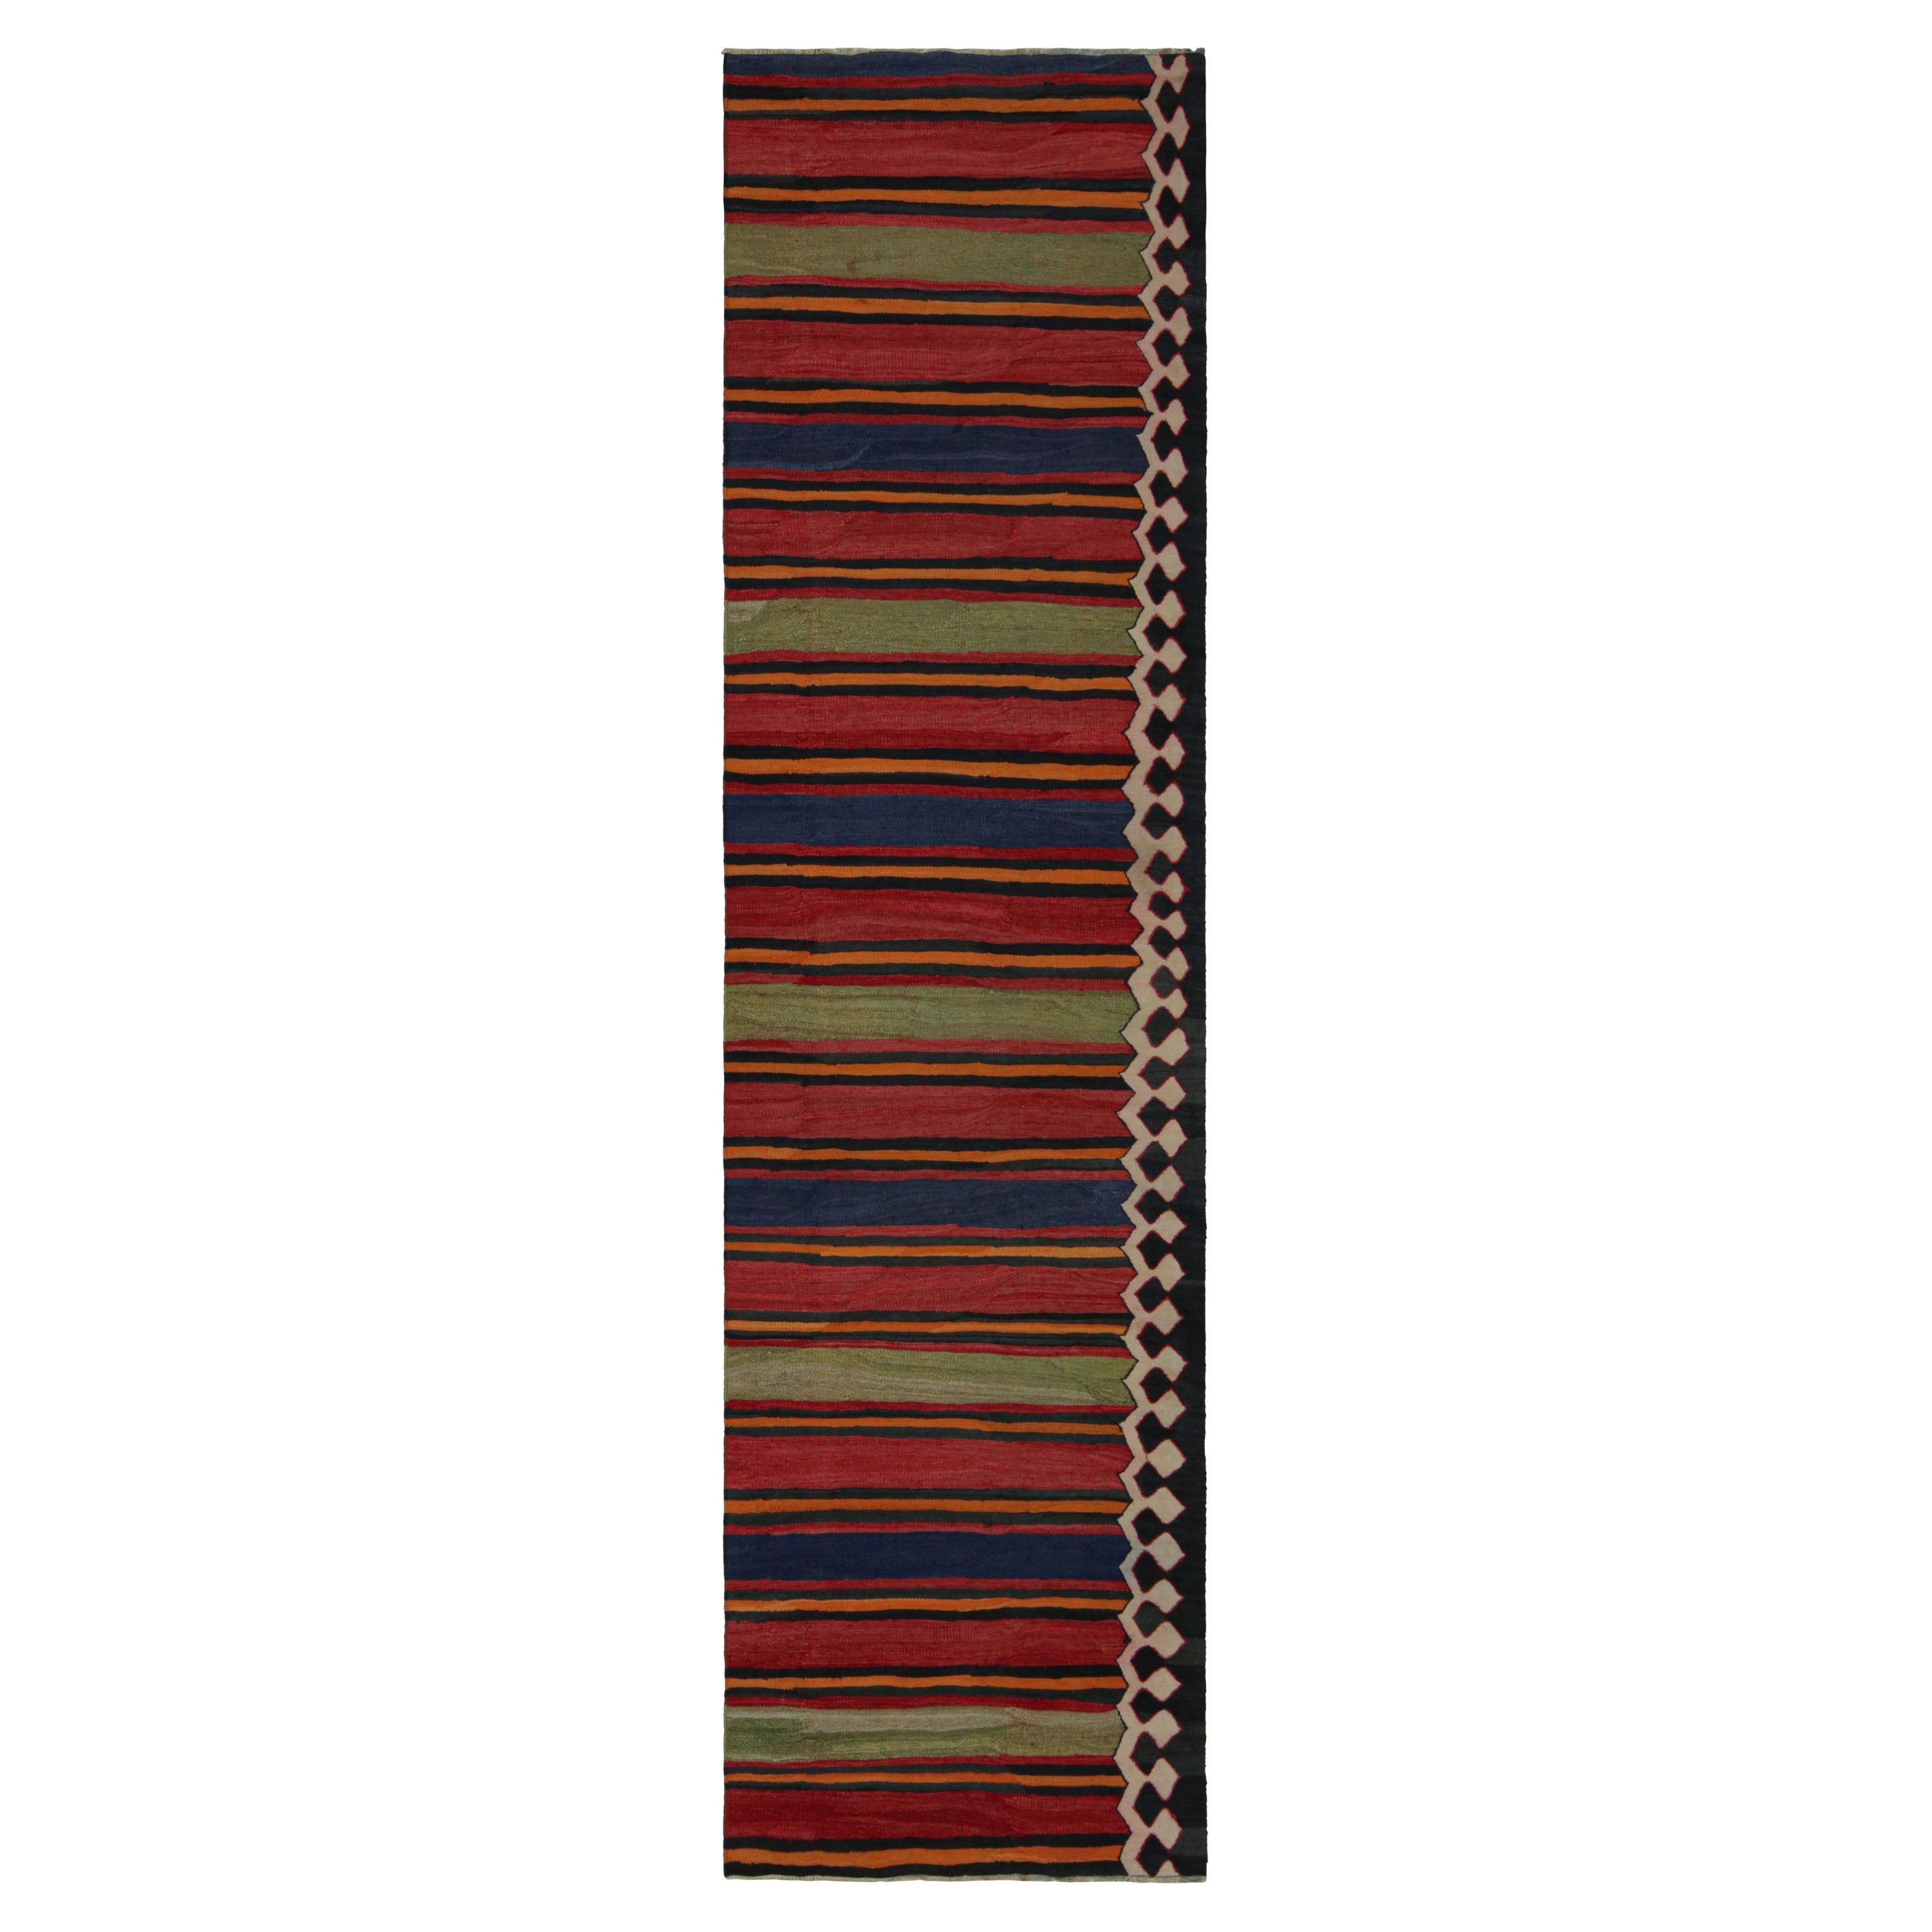 Vintage Afghan Tribal Kilim Runner Rug with Colorful Stripes, from Rug & Kilim